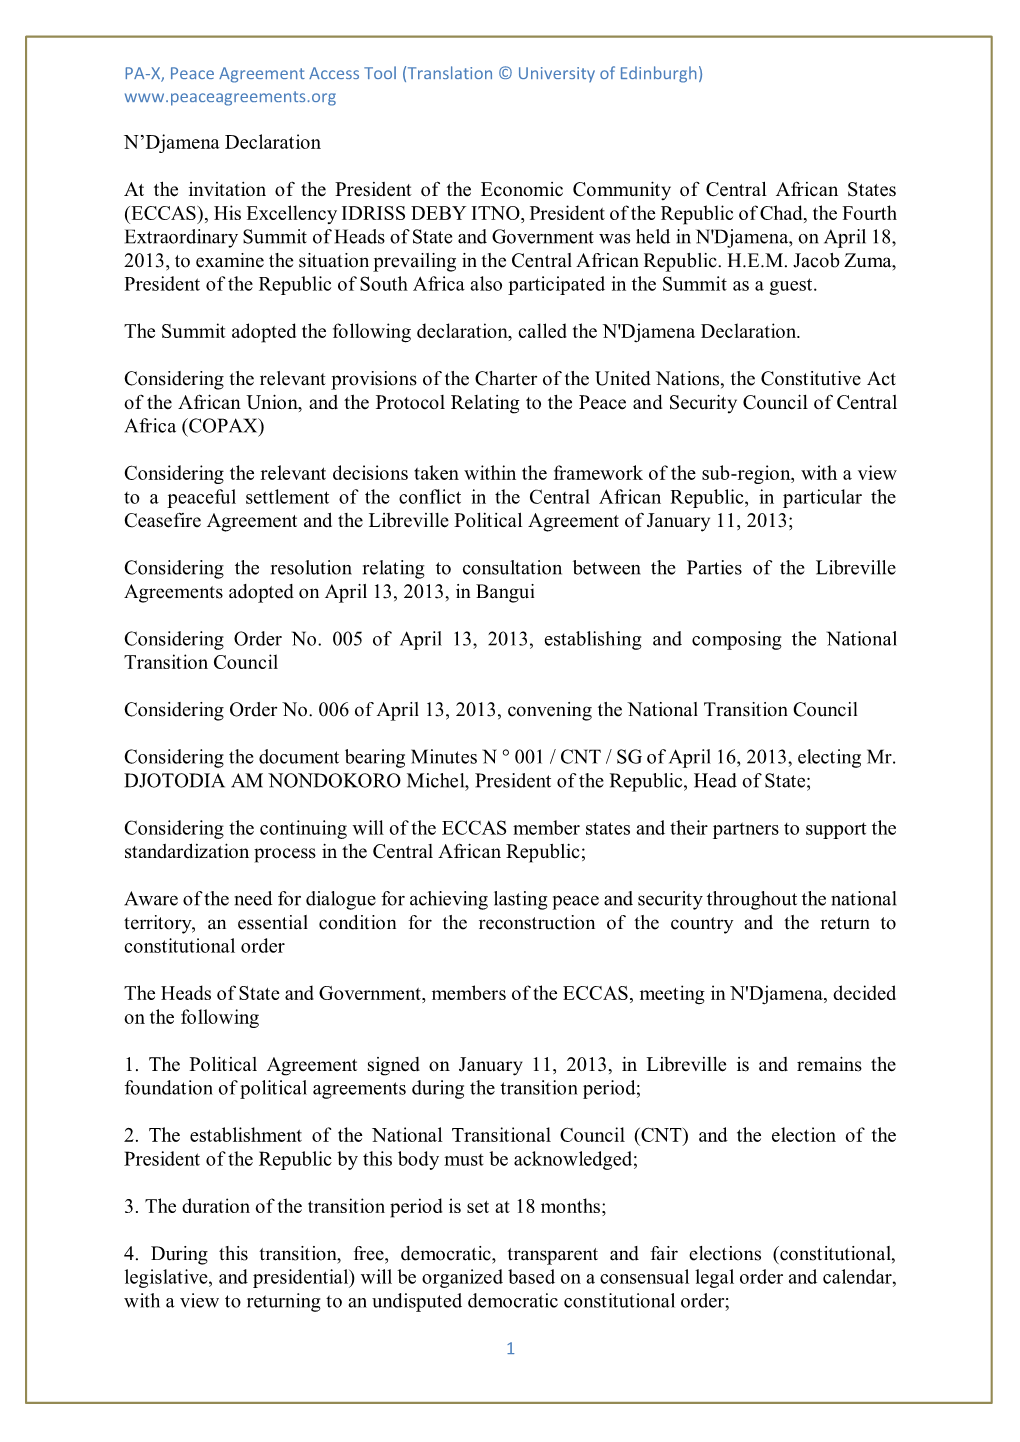 Declaration of N'djamena